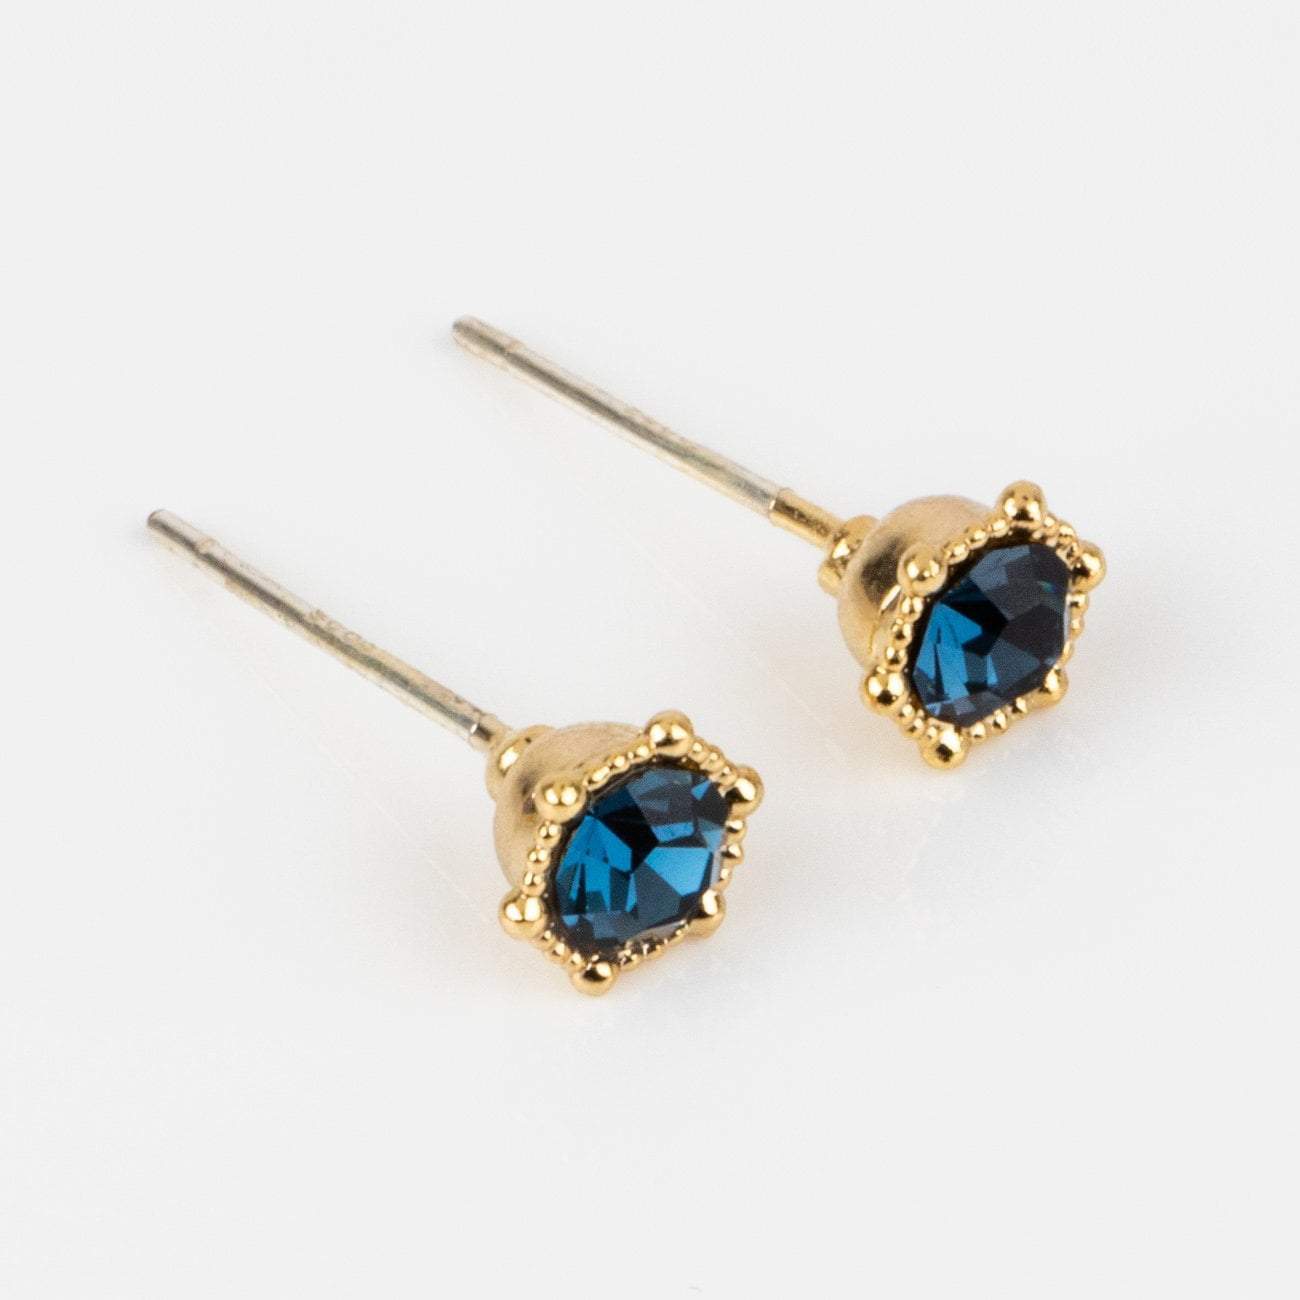 astrid stud earrings blue montana swarovski crystals yellow gold jewelry